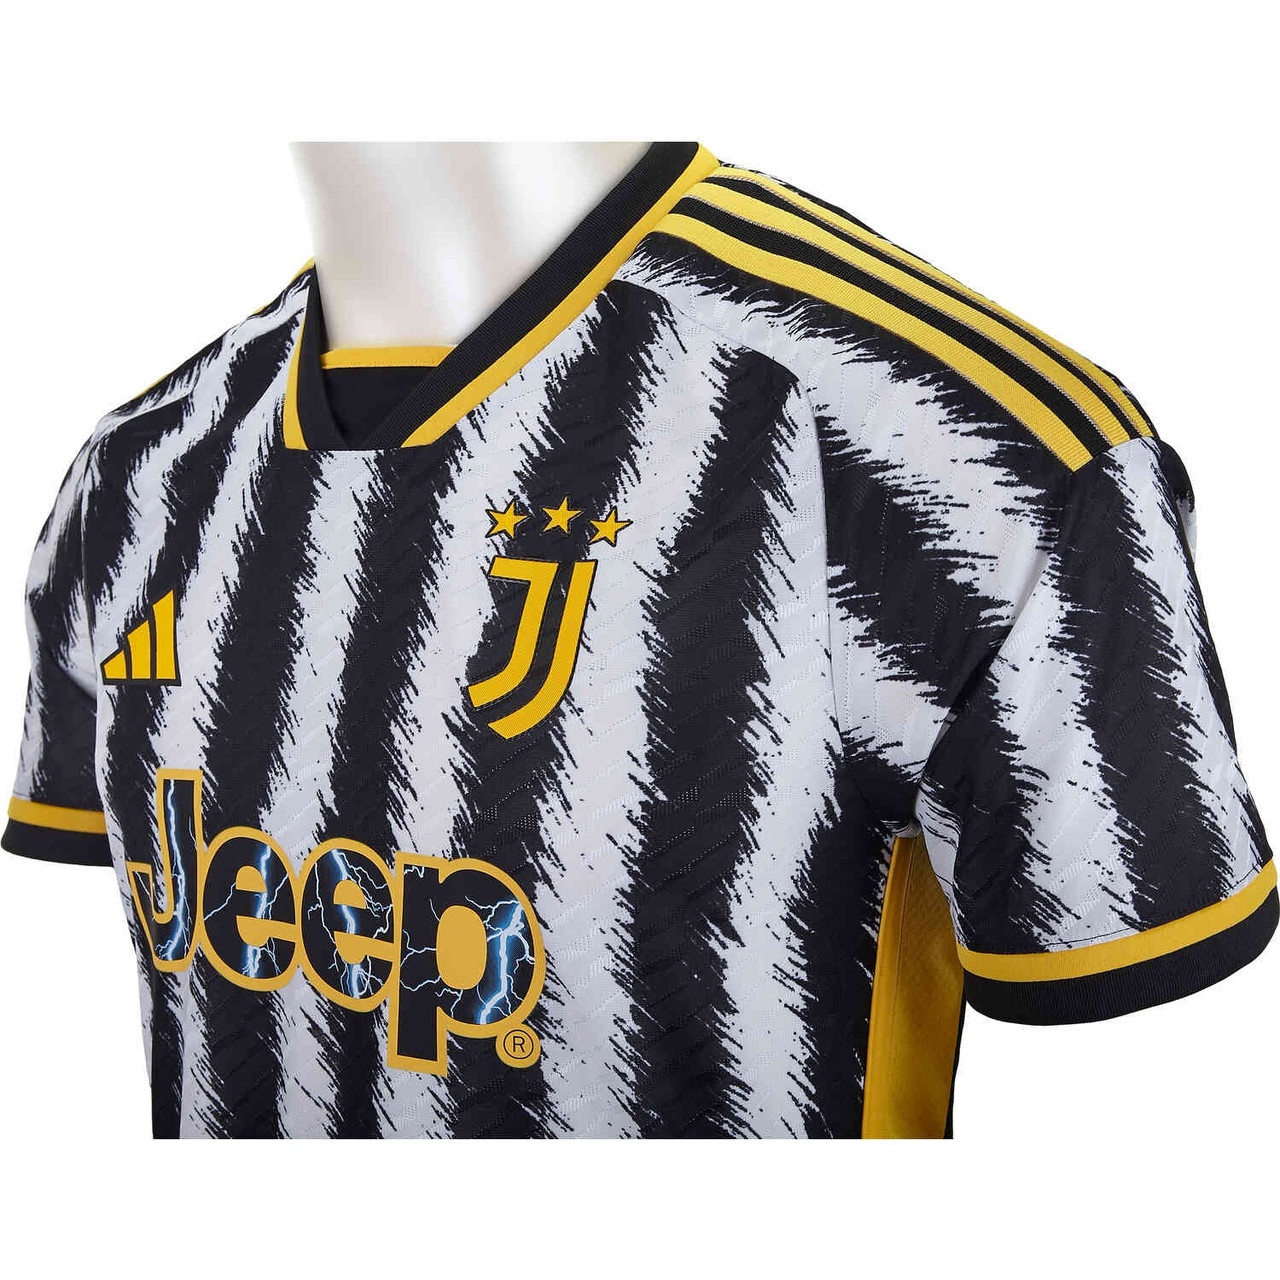 Adidas Juventus 21/22 Third Authentic Jersey Shock Yellow M - Mens Soccer Jerseys